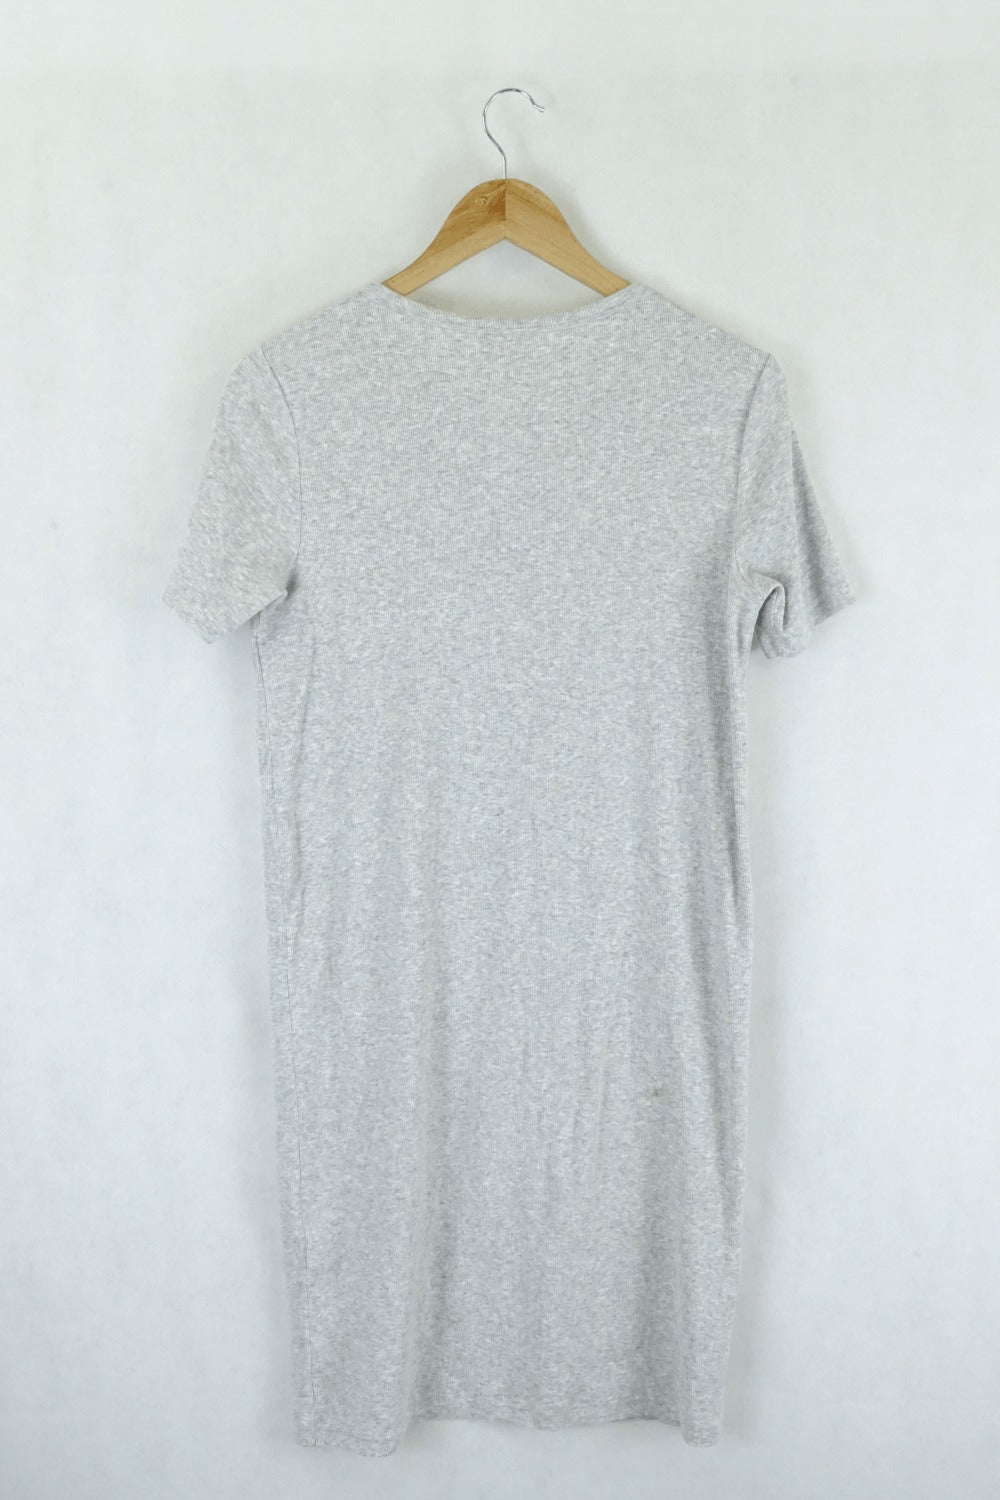 Cos Grey Ribbed Dress S